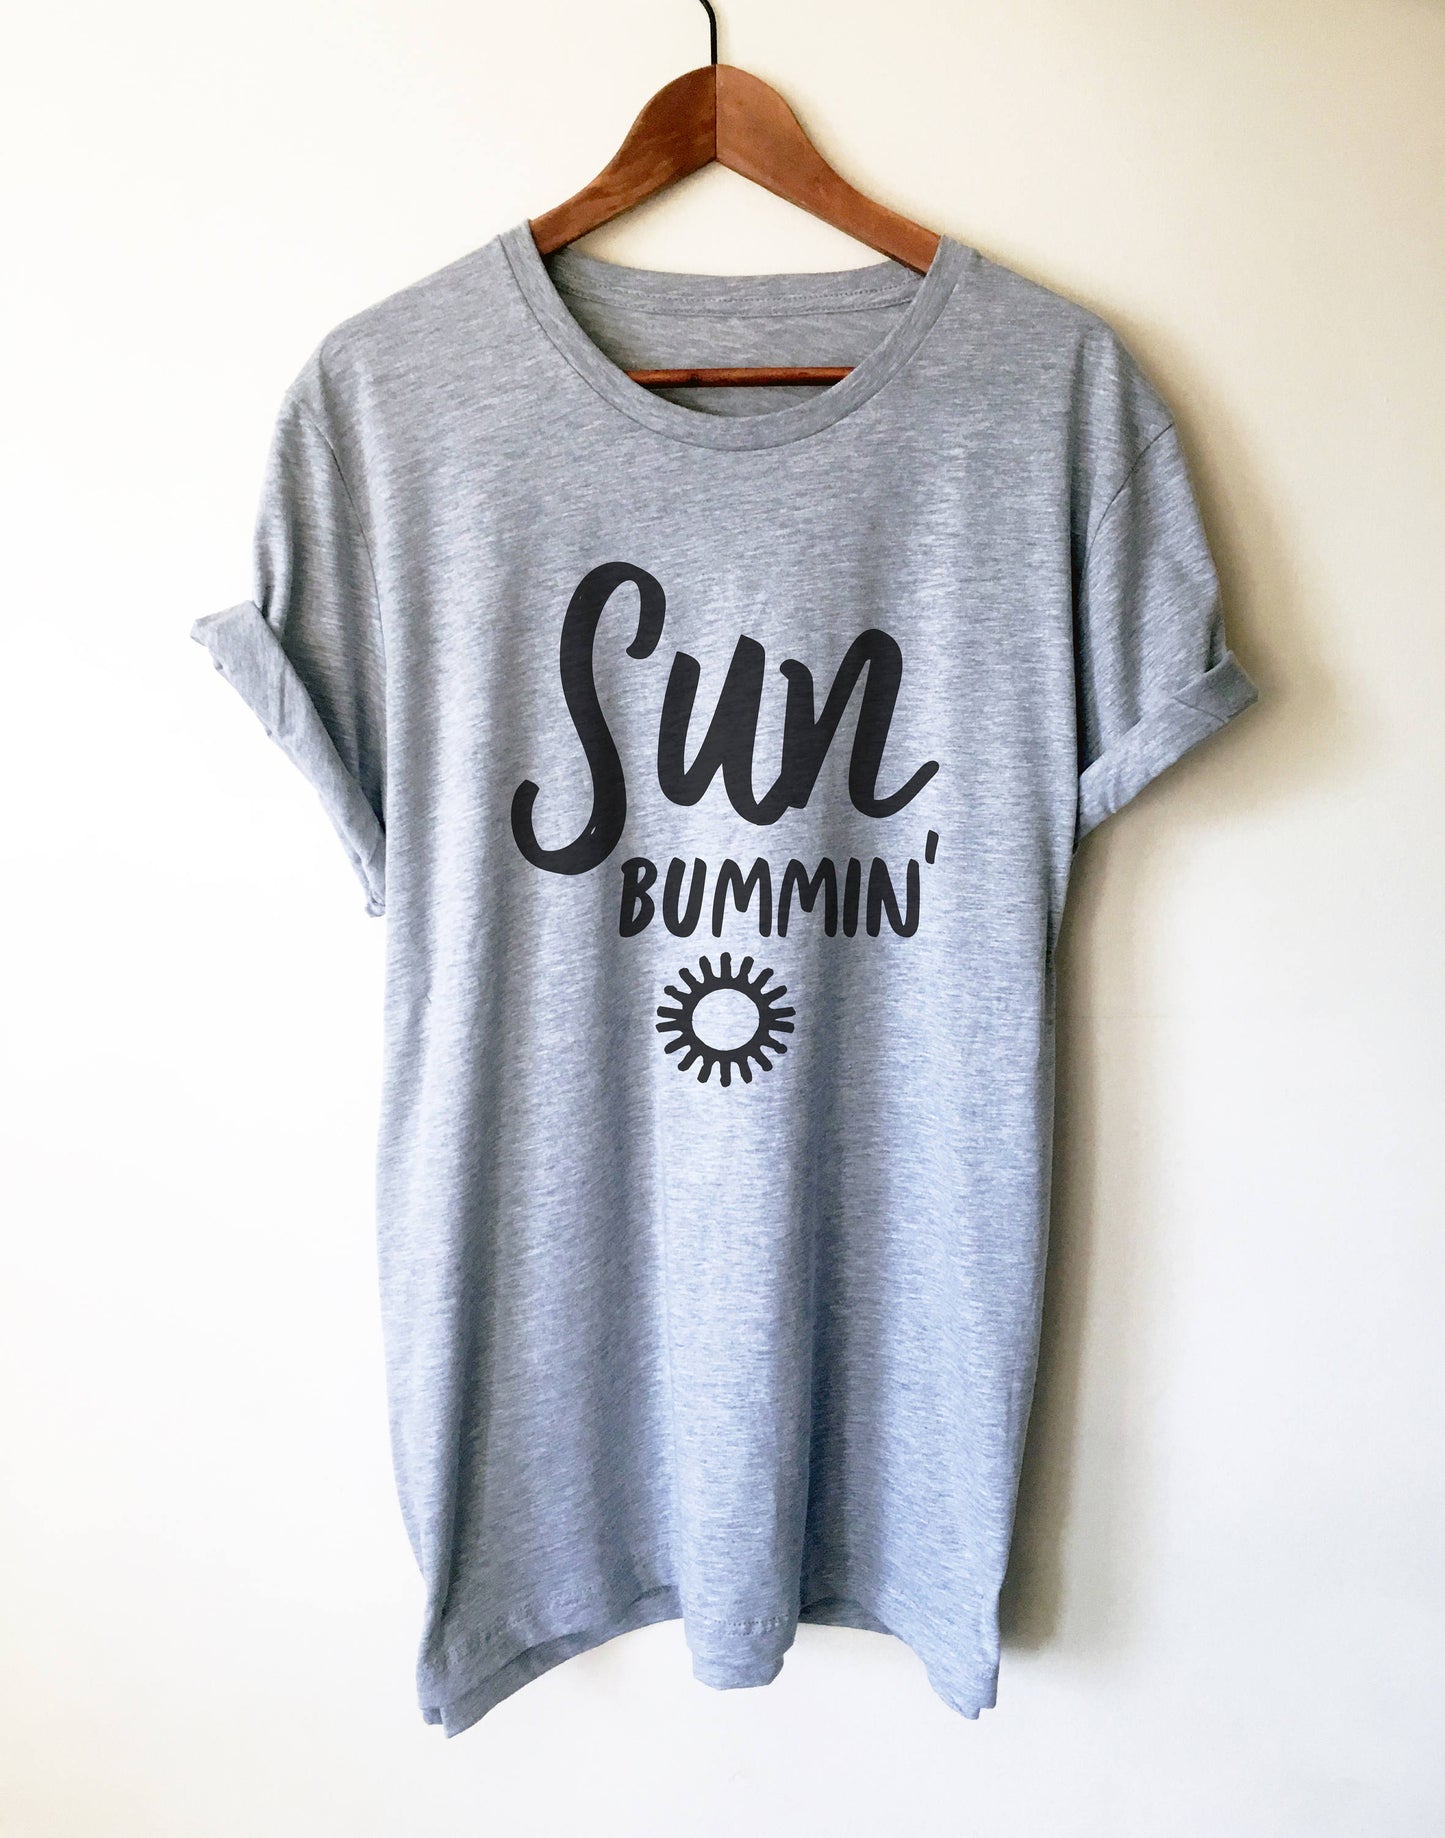 Sun Bummin' Unisex T-Shirt - Cute